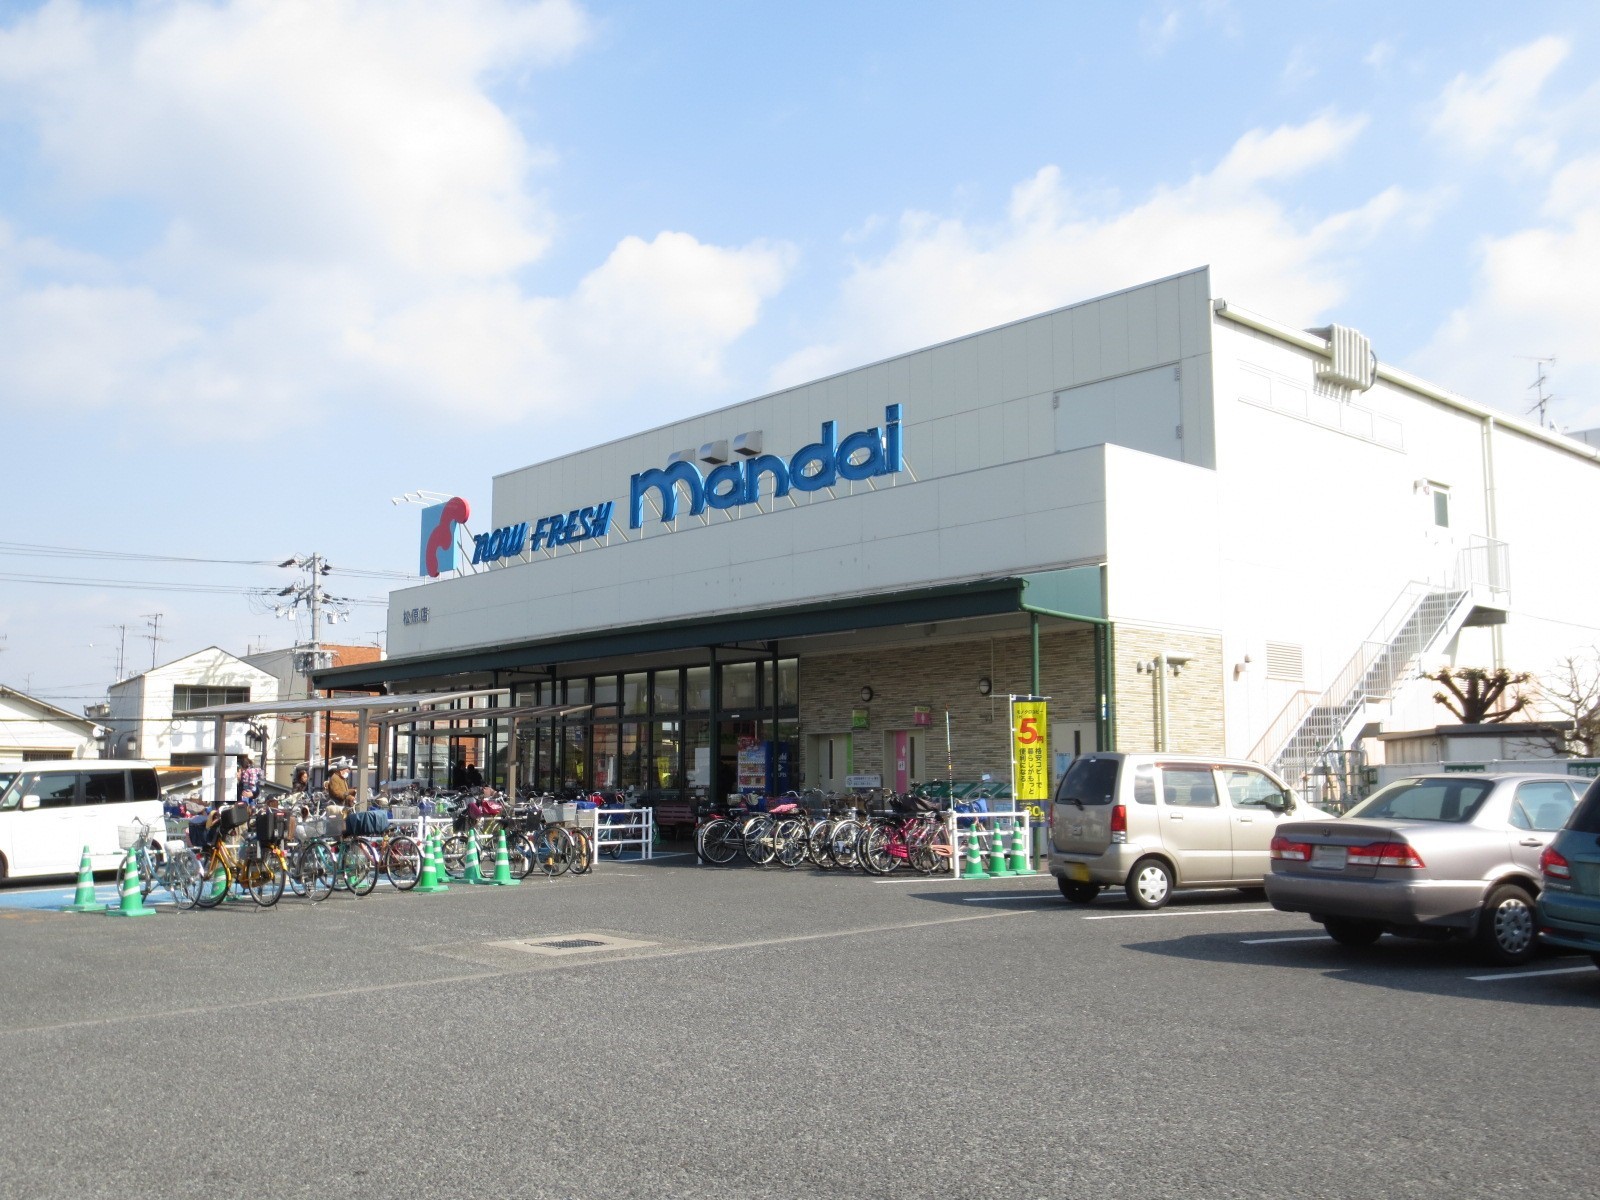 Supermarket. Bandai Matsubara store up to (super) 1430m